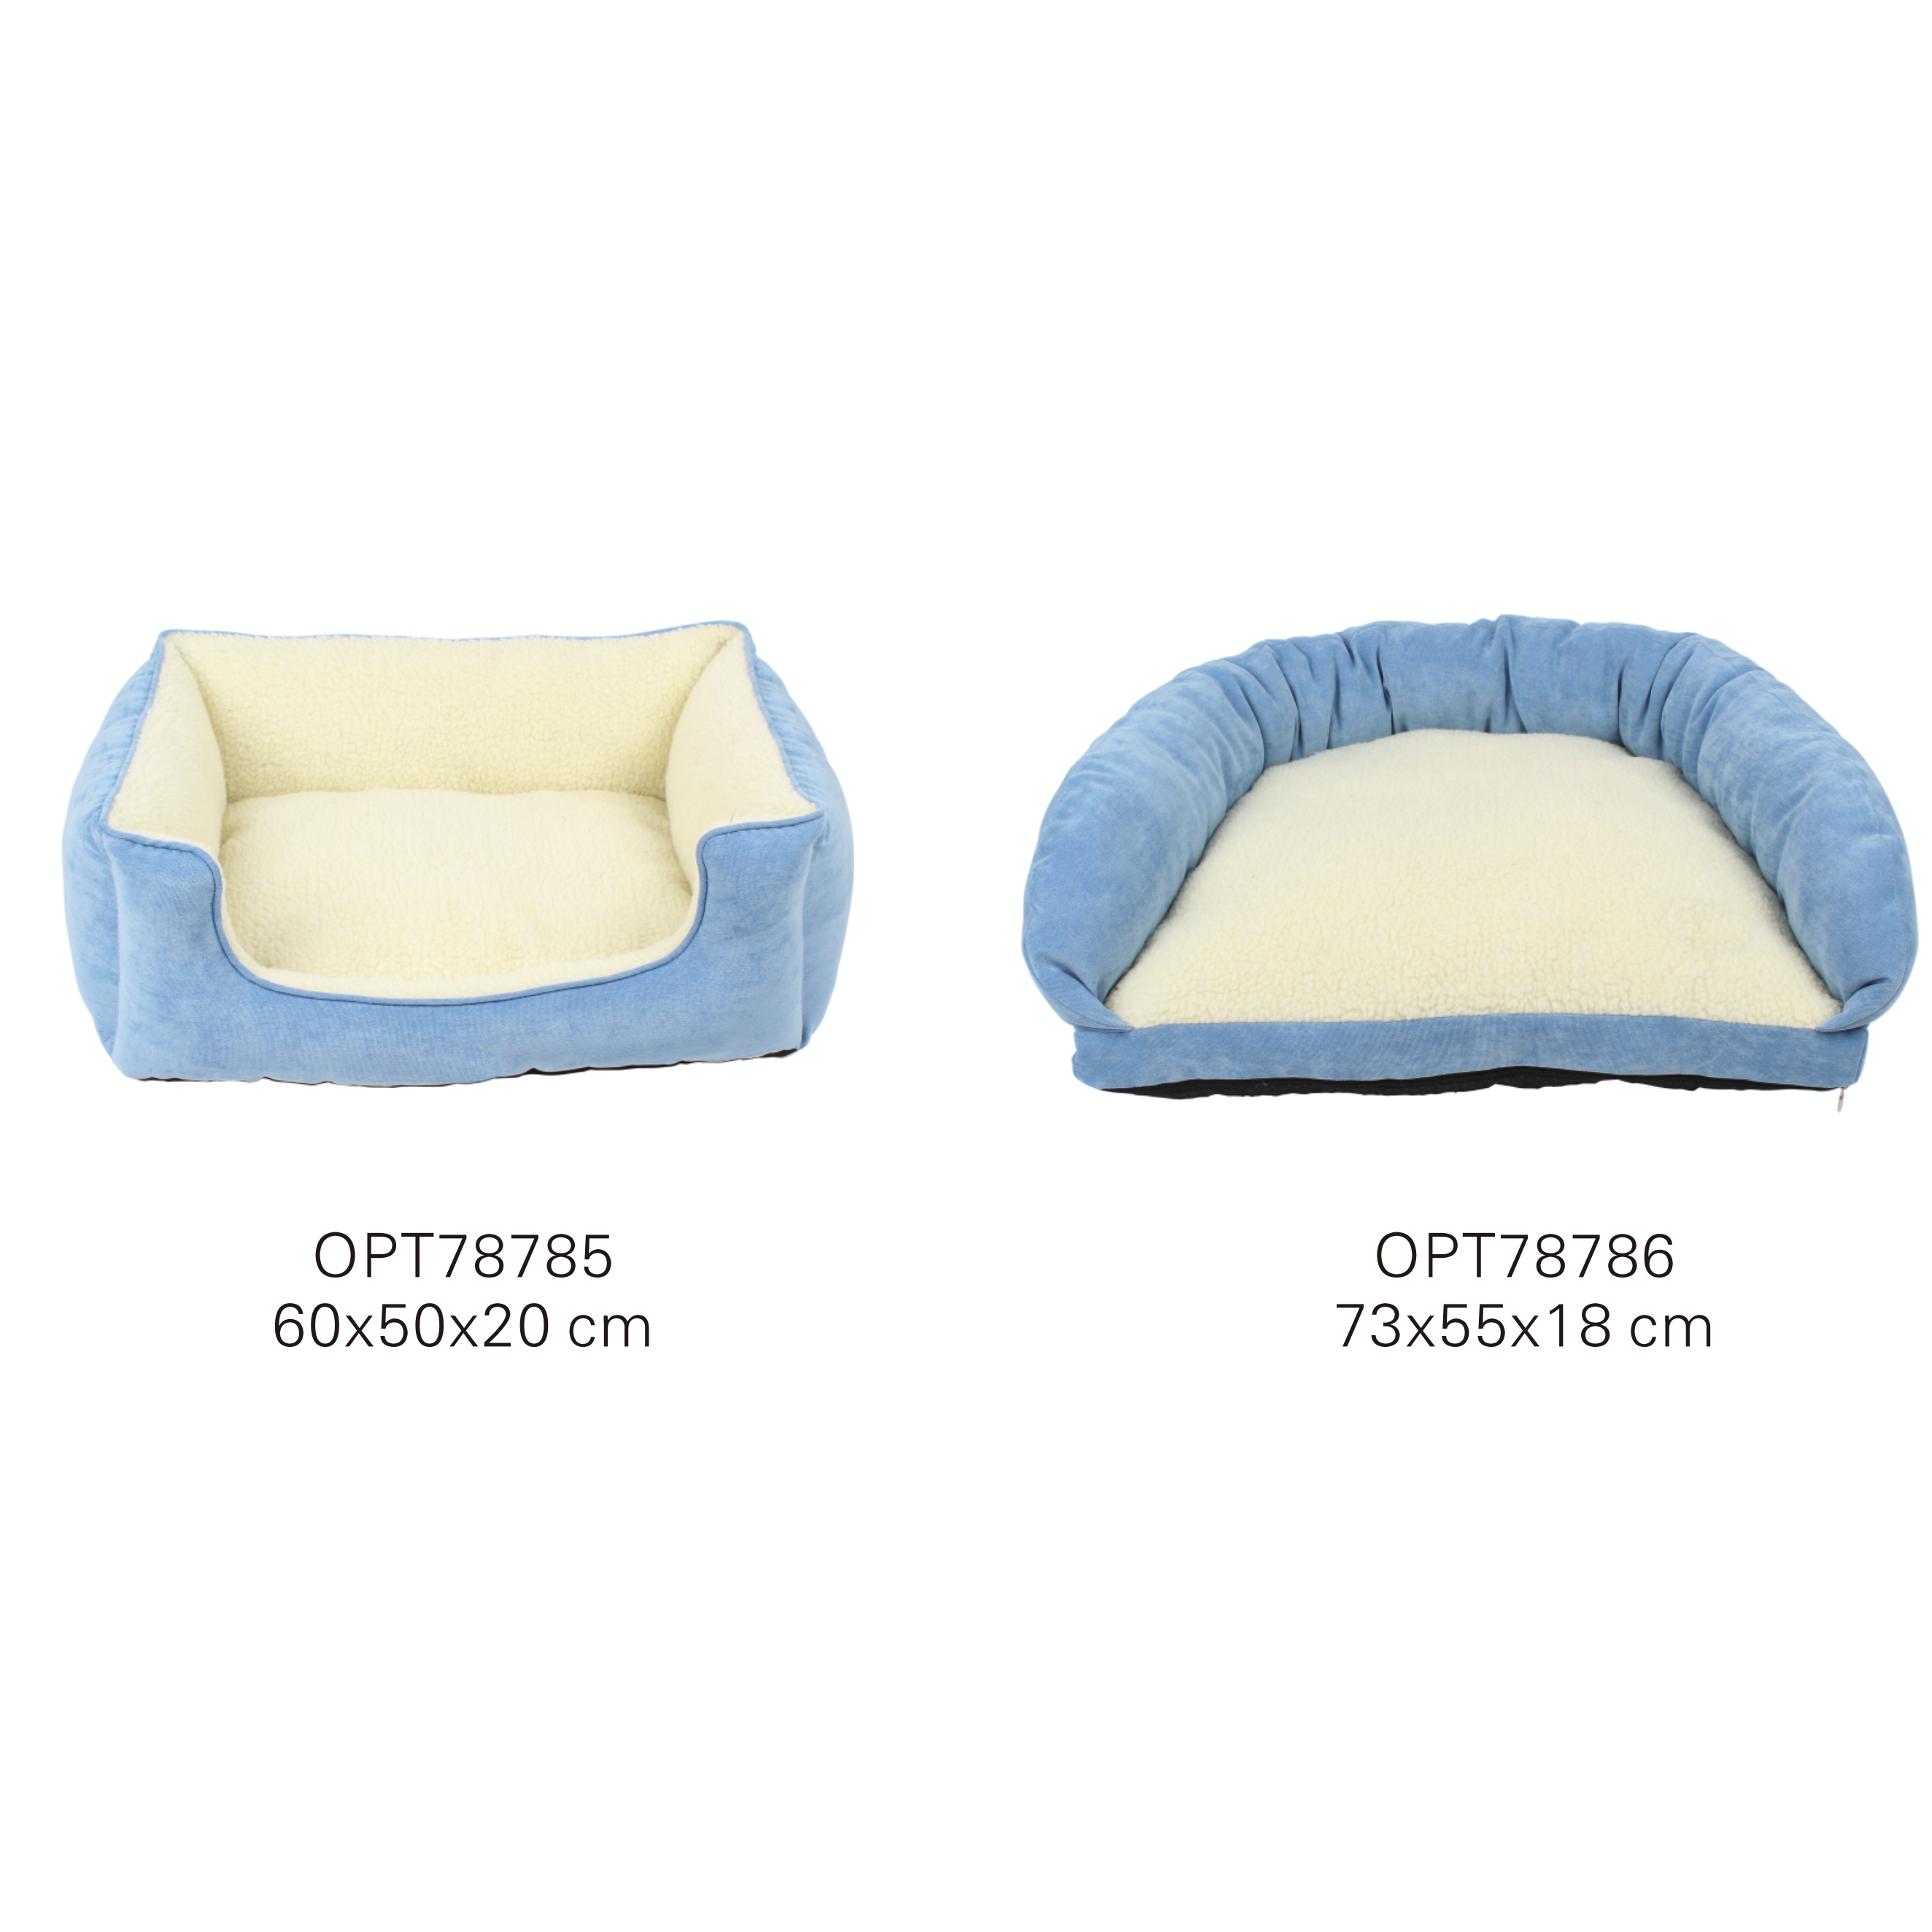 OPT78785-OPT78786 Pet bedding